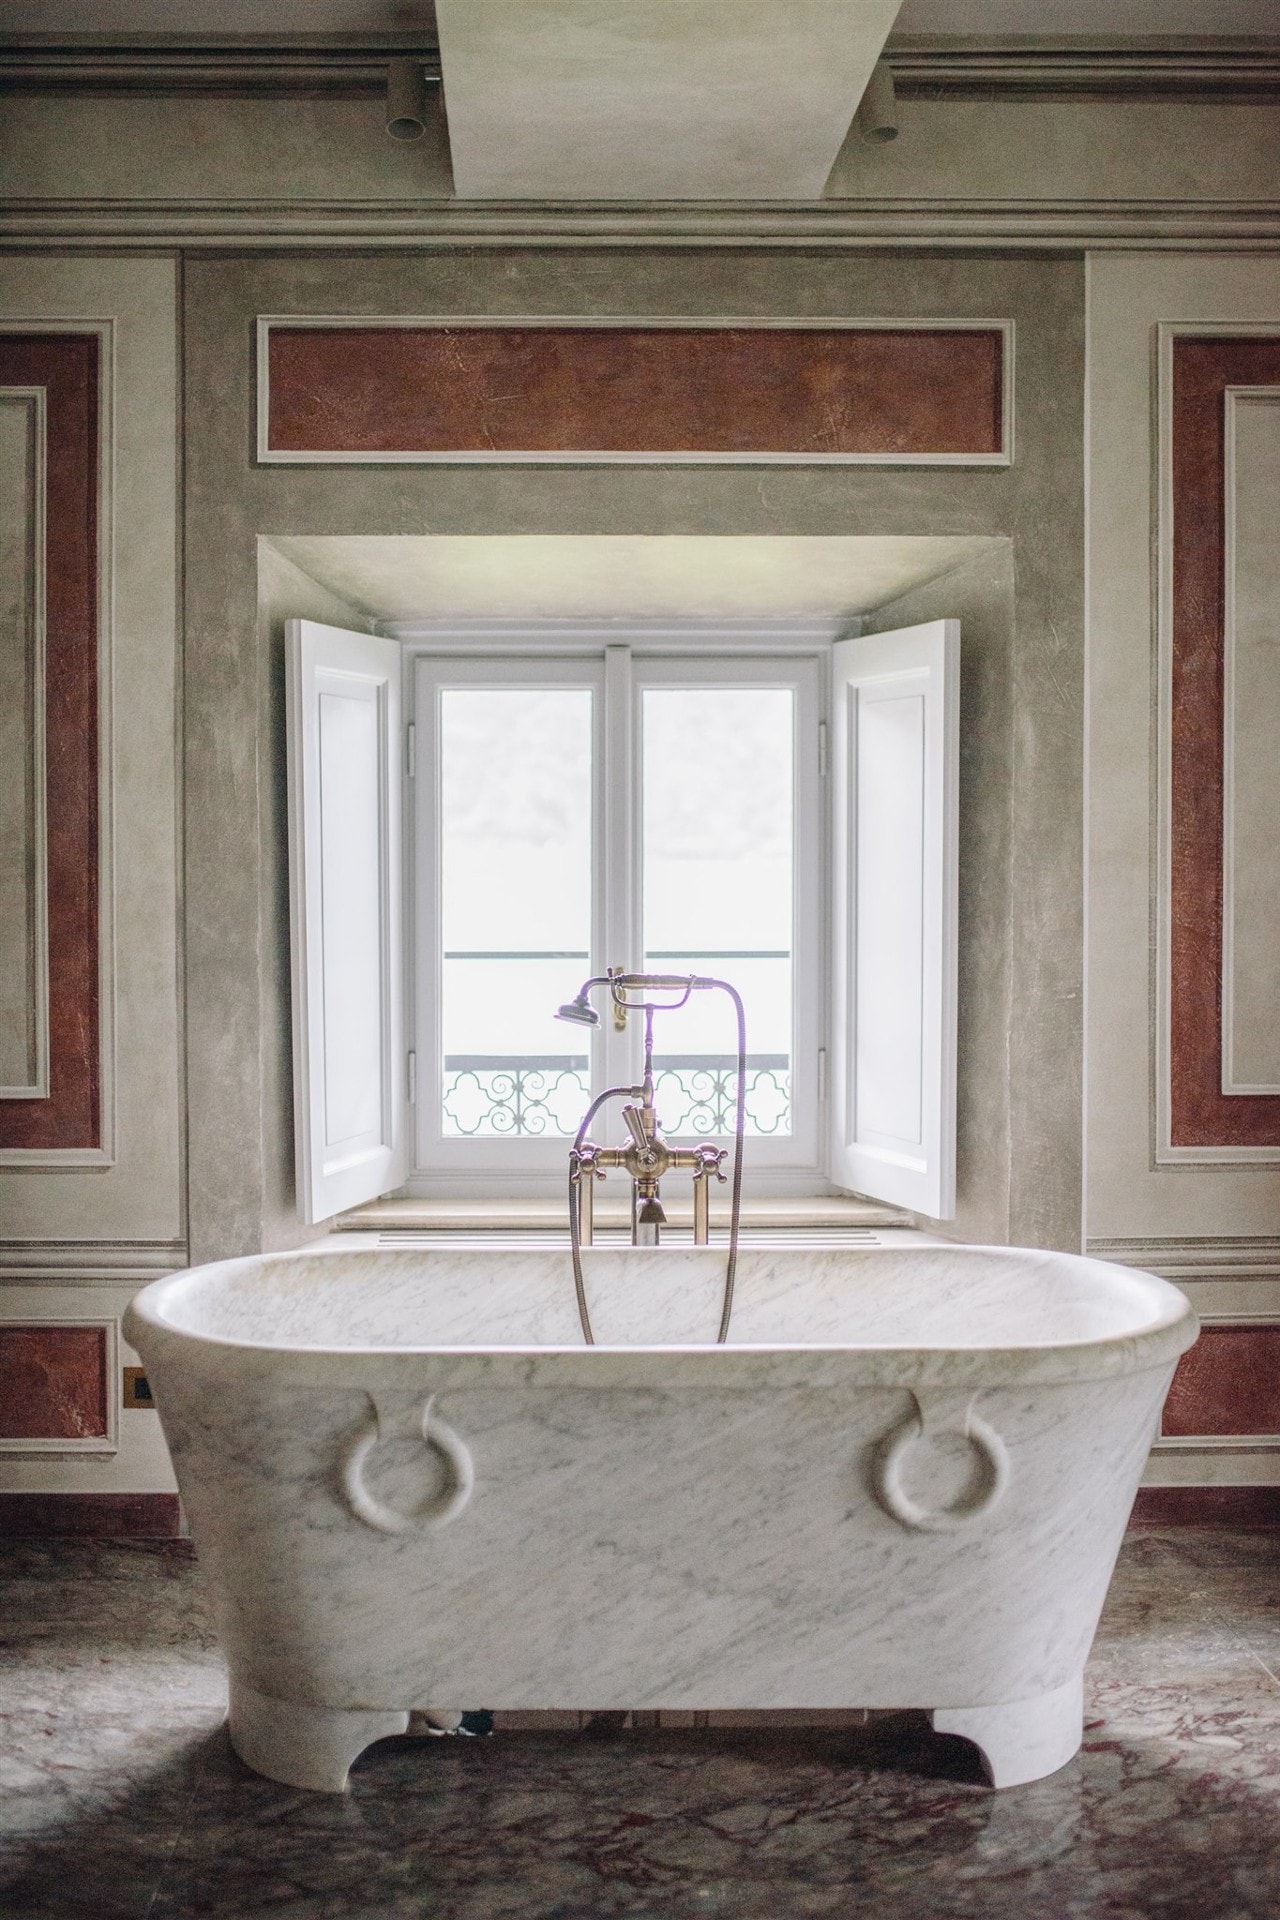 house of gucci film home italy villa balbiano bathroom bath